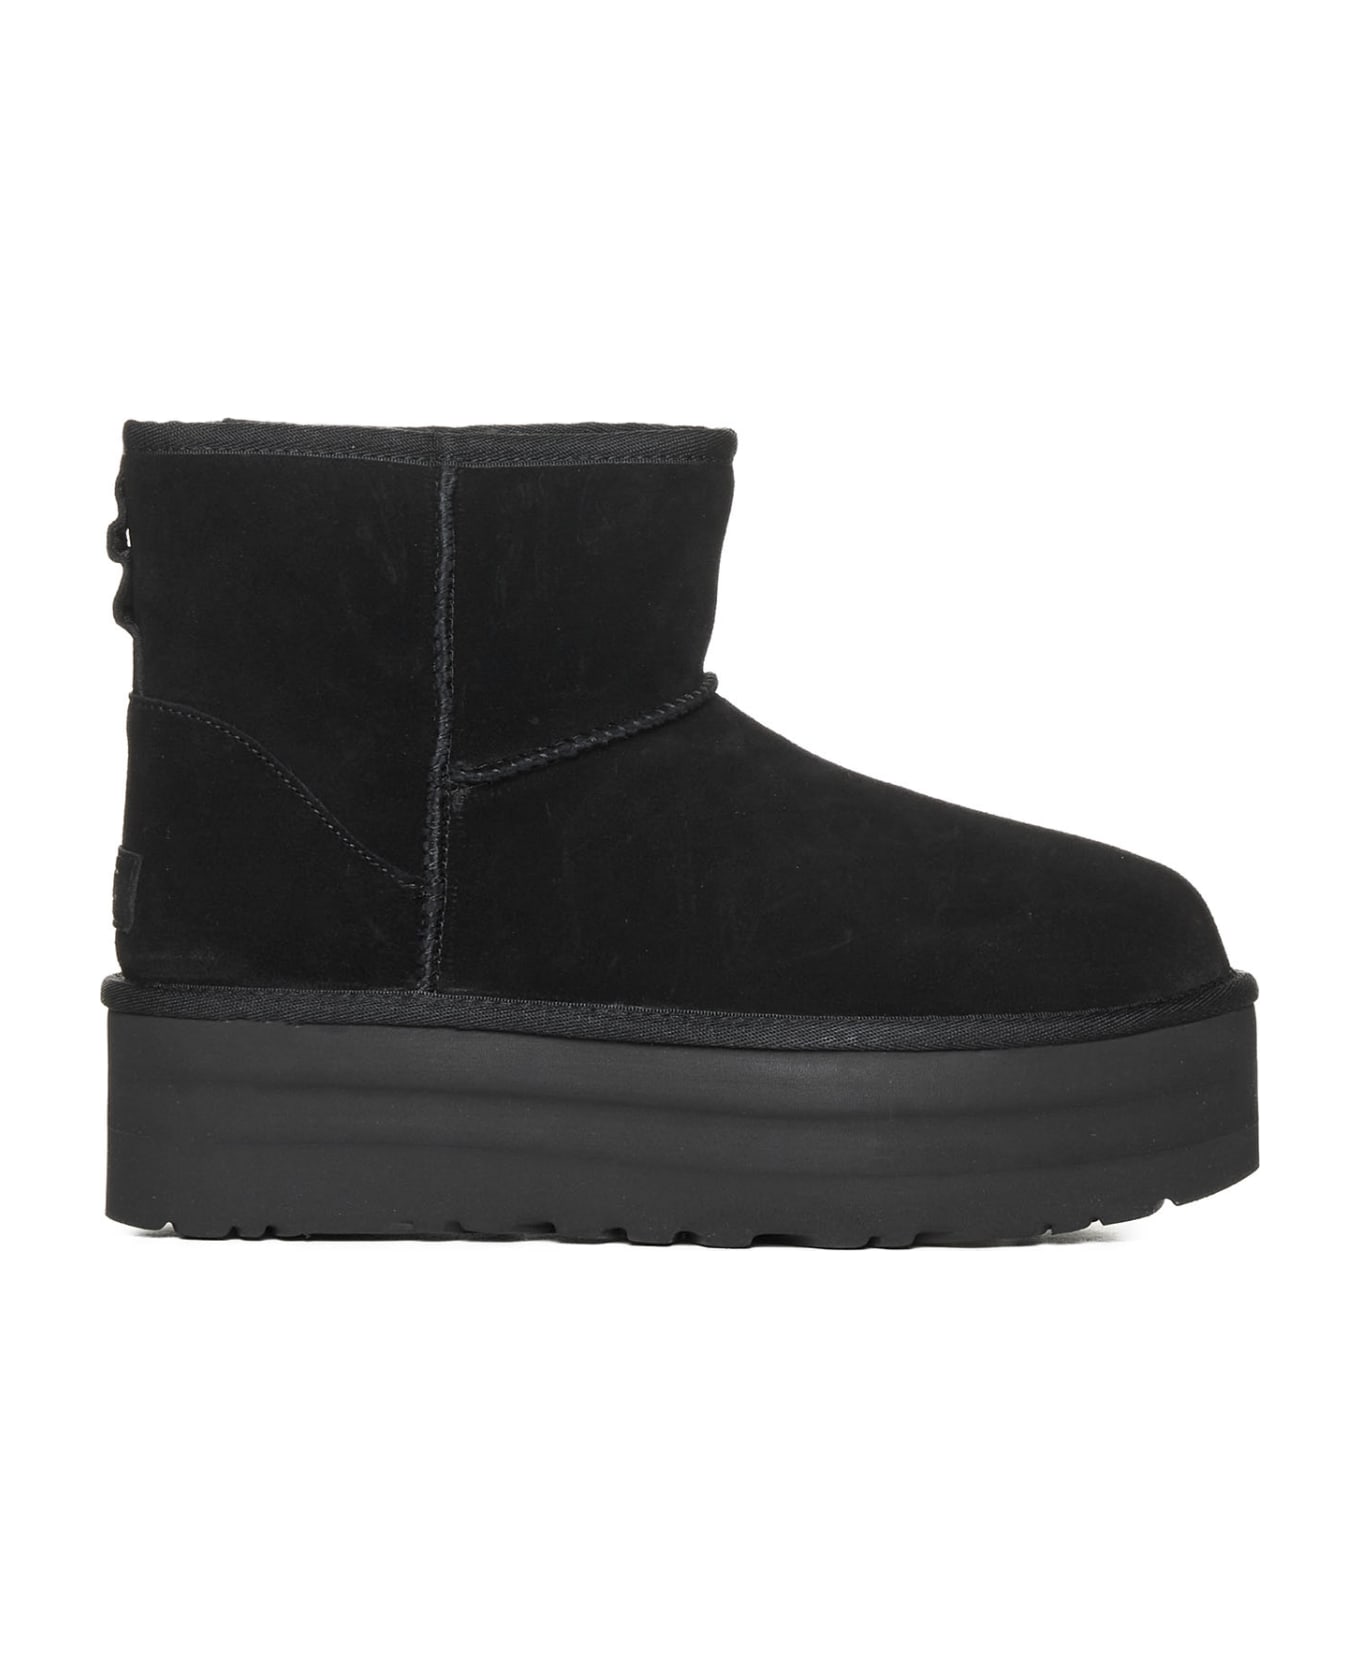 UGG Boots - Black